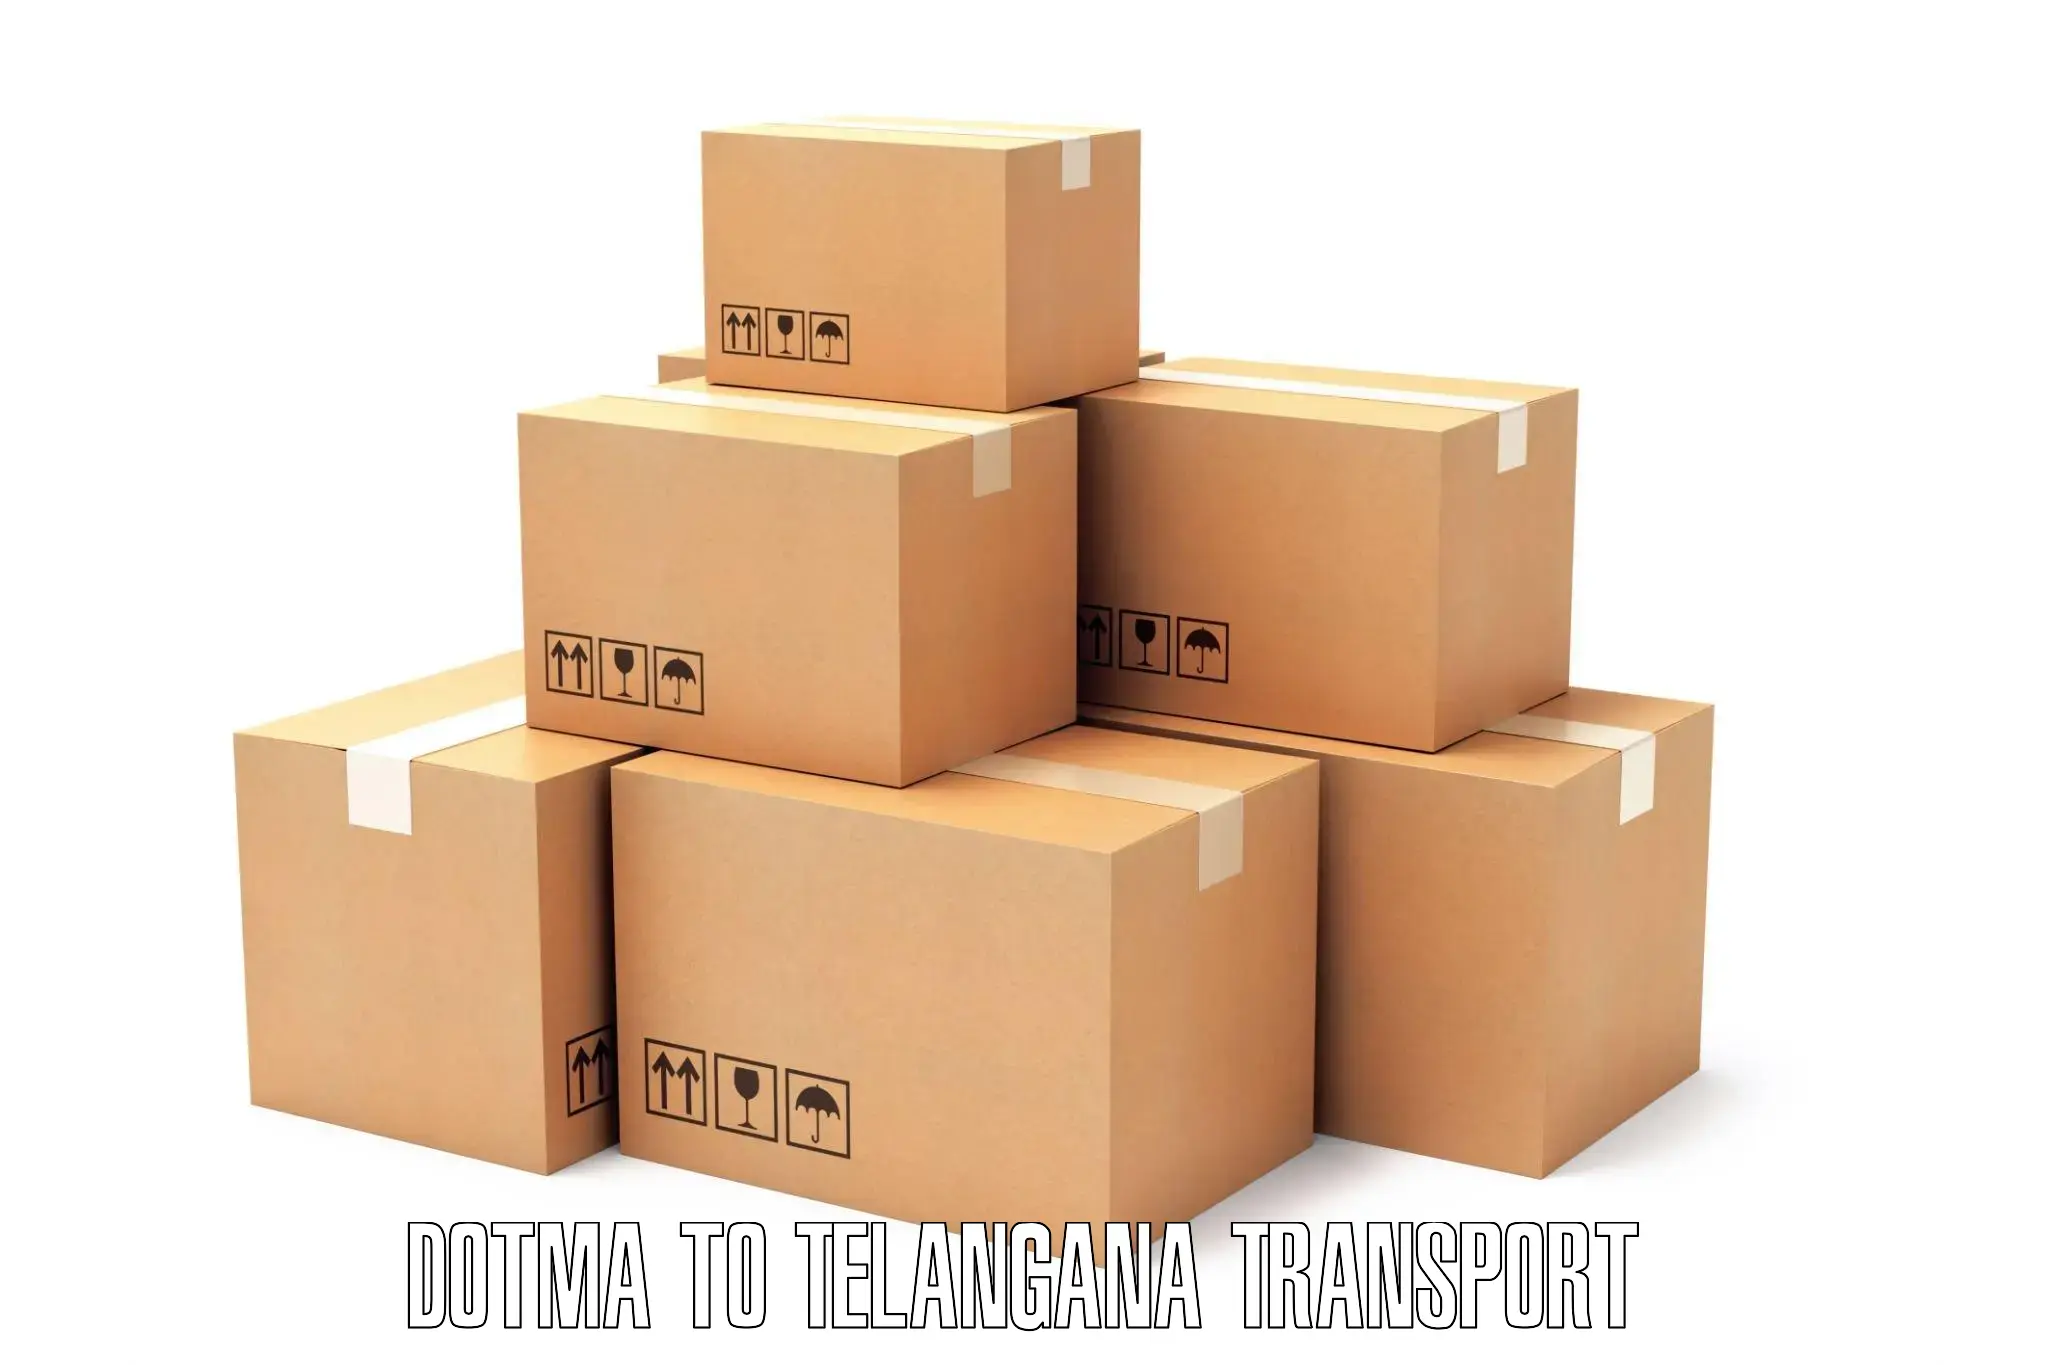 Delivery service Dotma to Hanamkonda